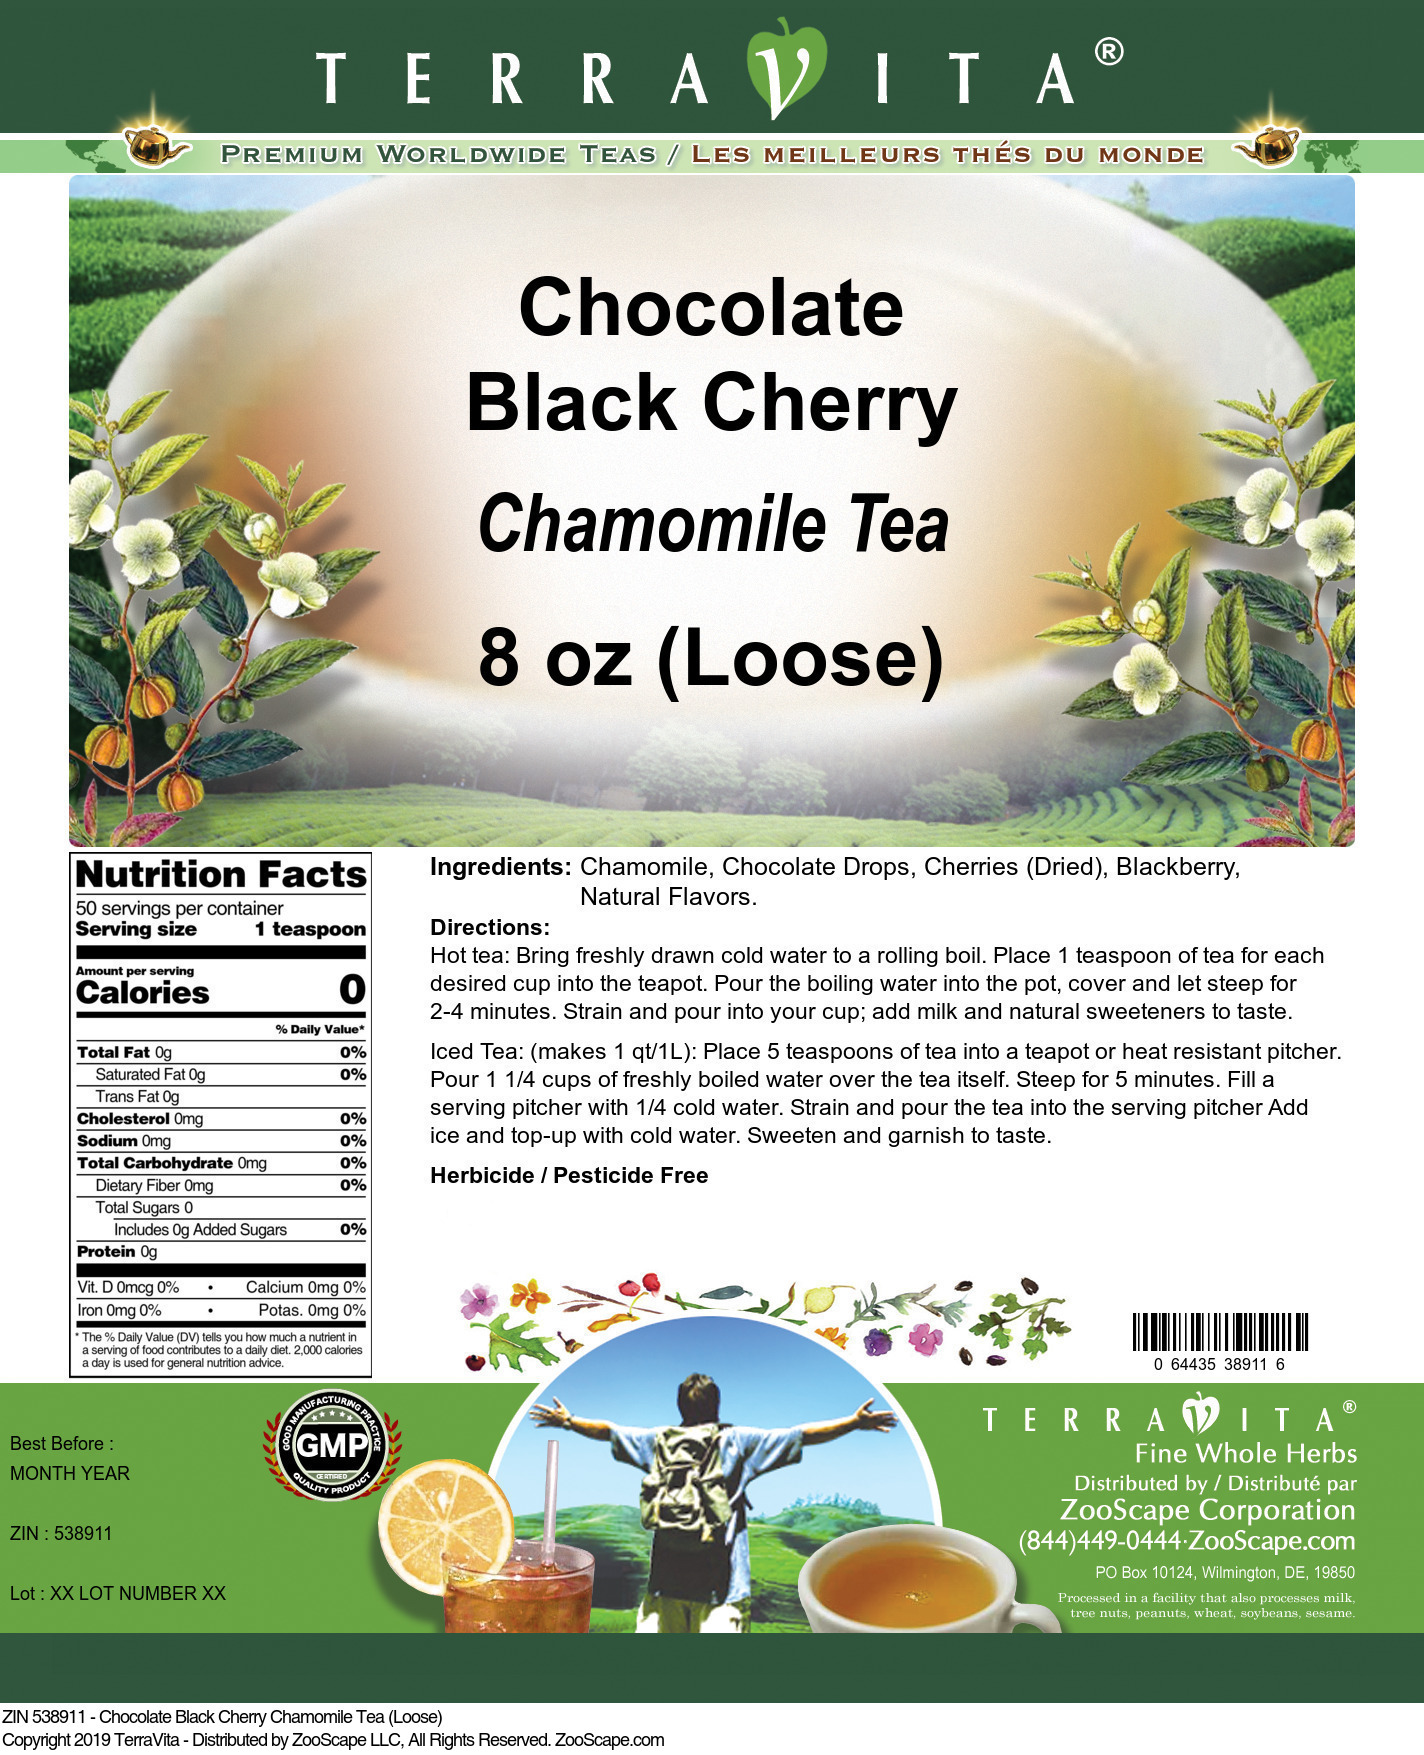 Chocolate Black Cherry Chamomile Tea (Loose) - Label